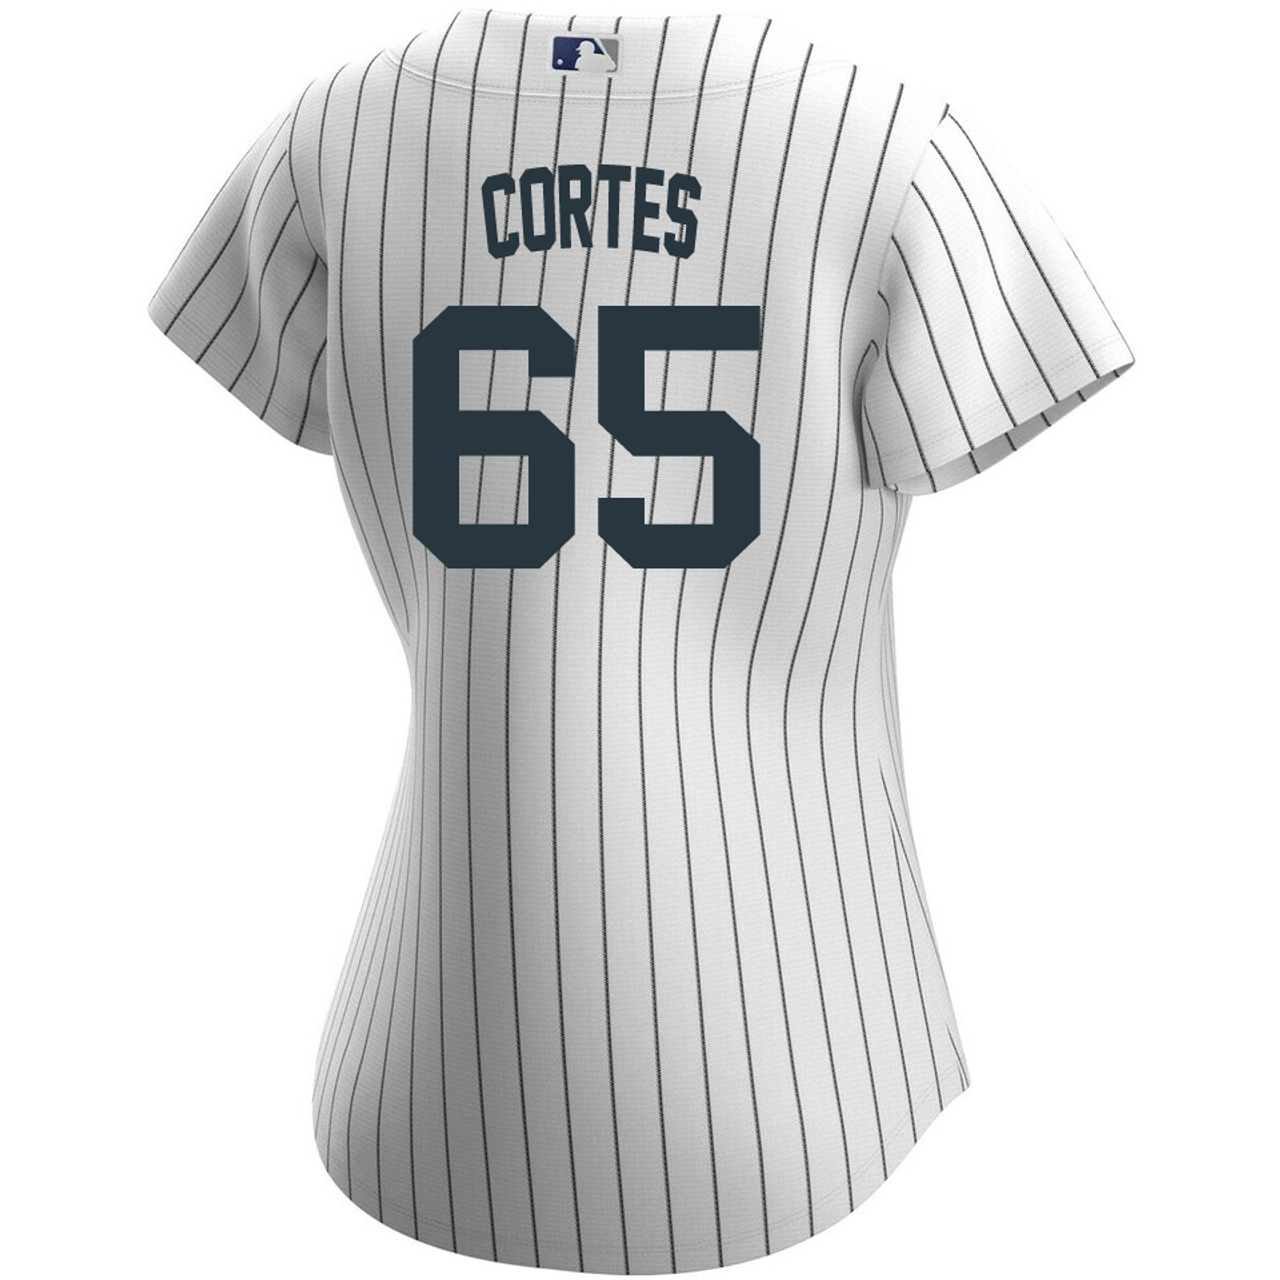 New York Yankees Women's Replica Home MLB Baseball Jersey ($65